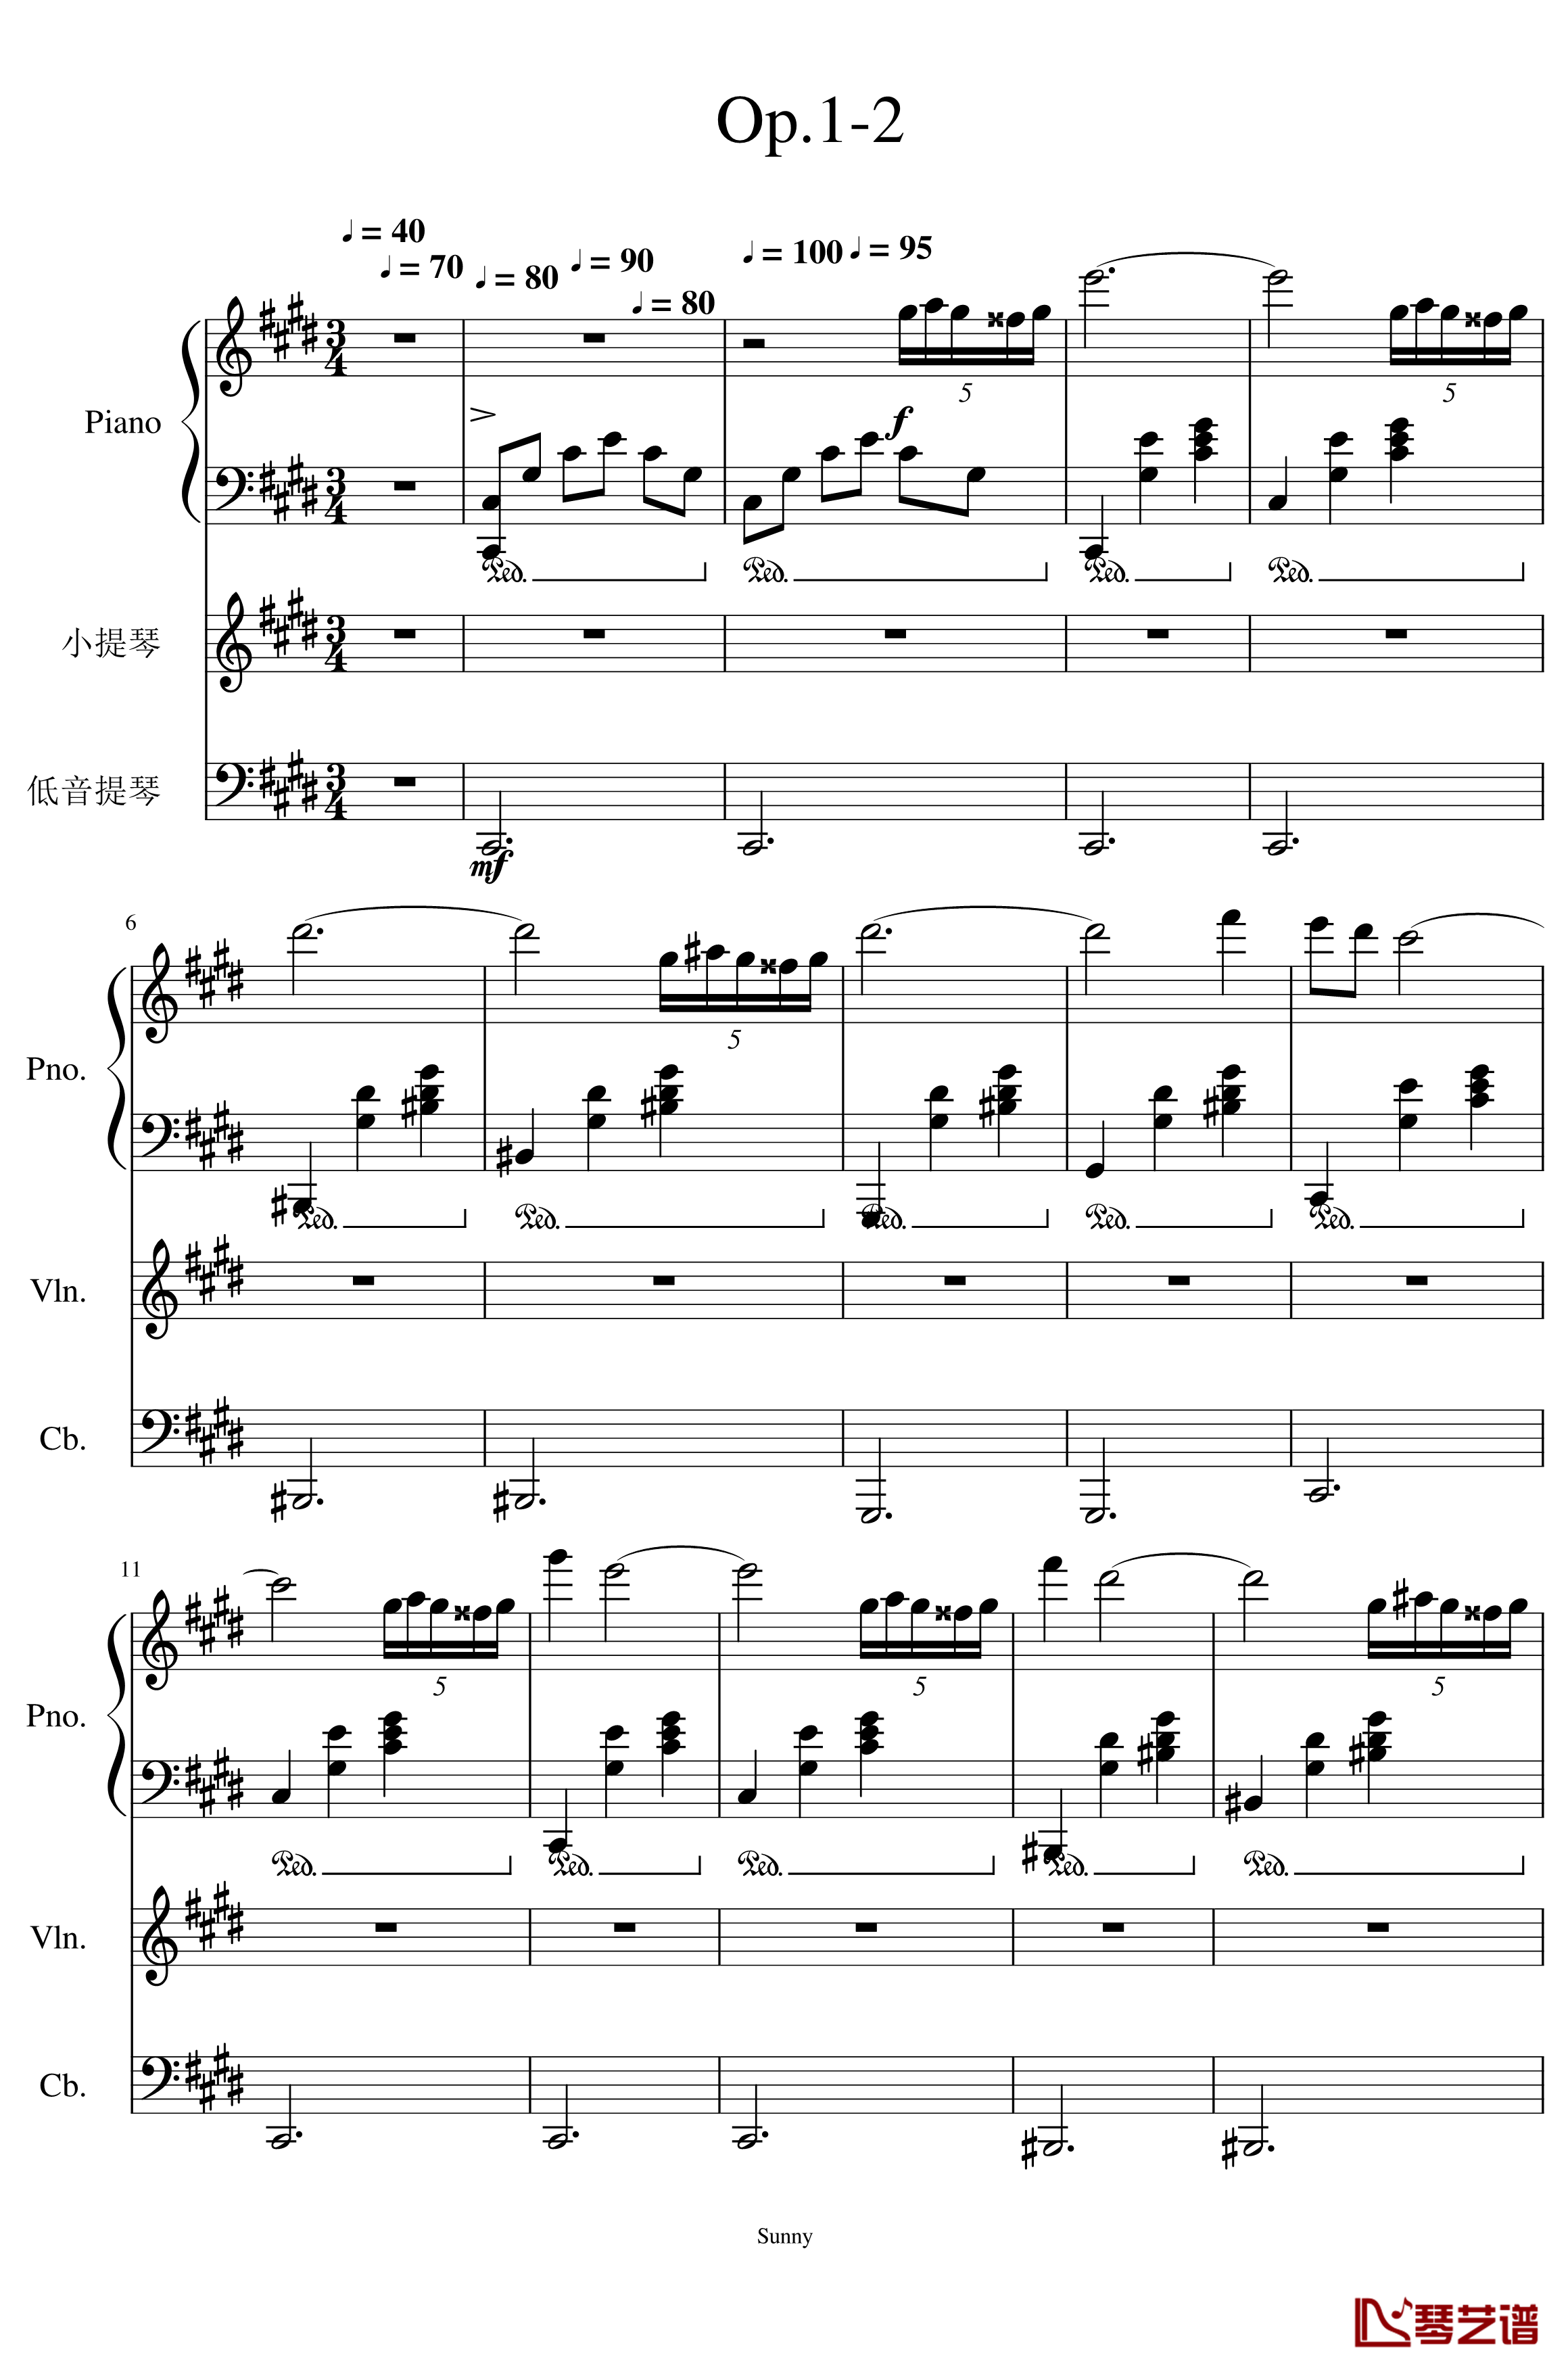 Op.1-2 钢琴谱-最苦与最乐-SunnyAK471